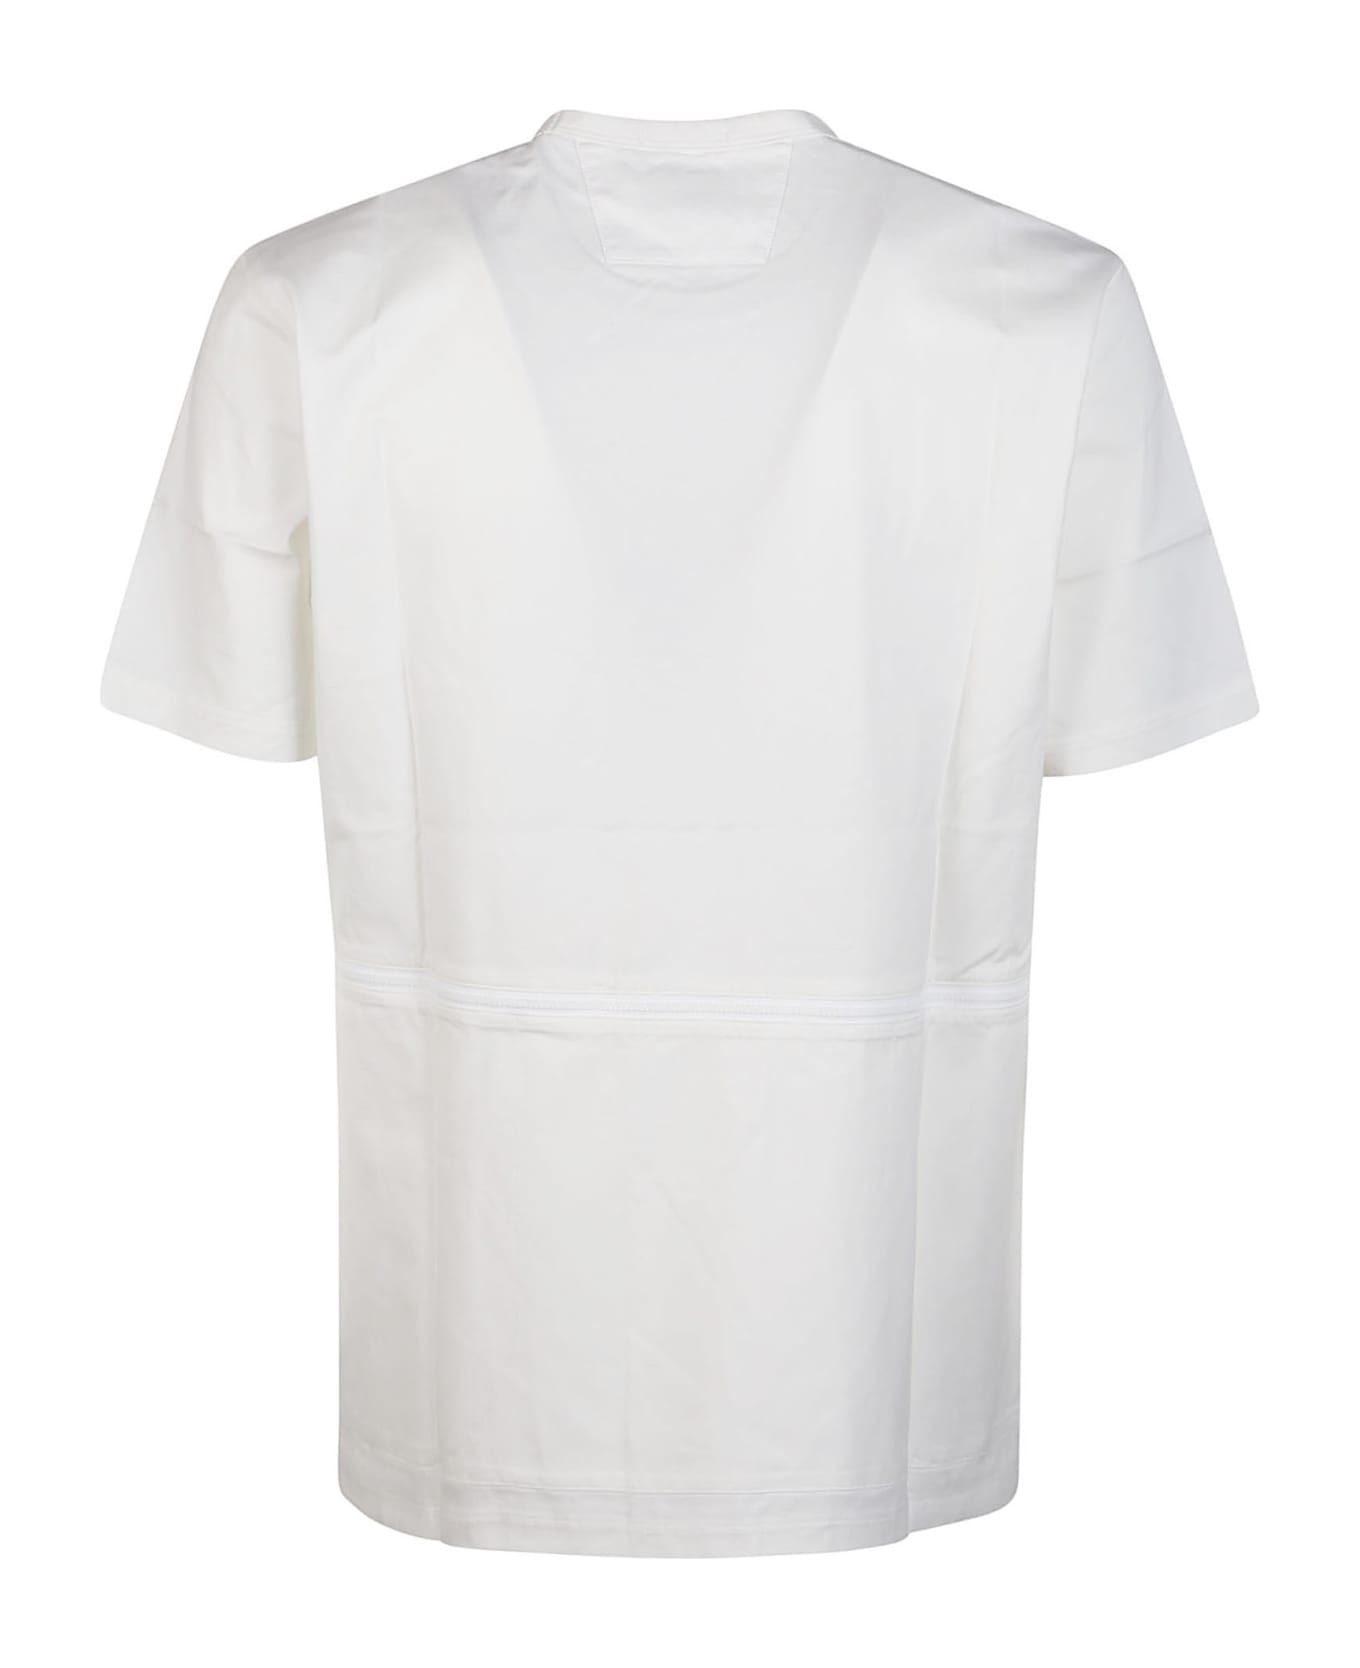 C.P. Company Metropolis Mercerized Jersey T-shirt - White